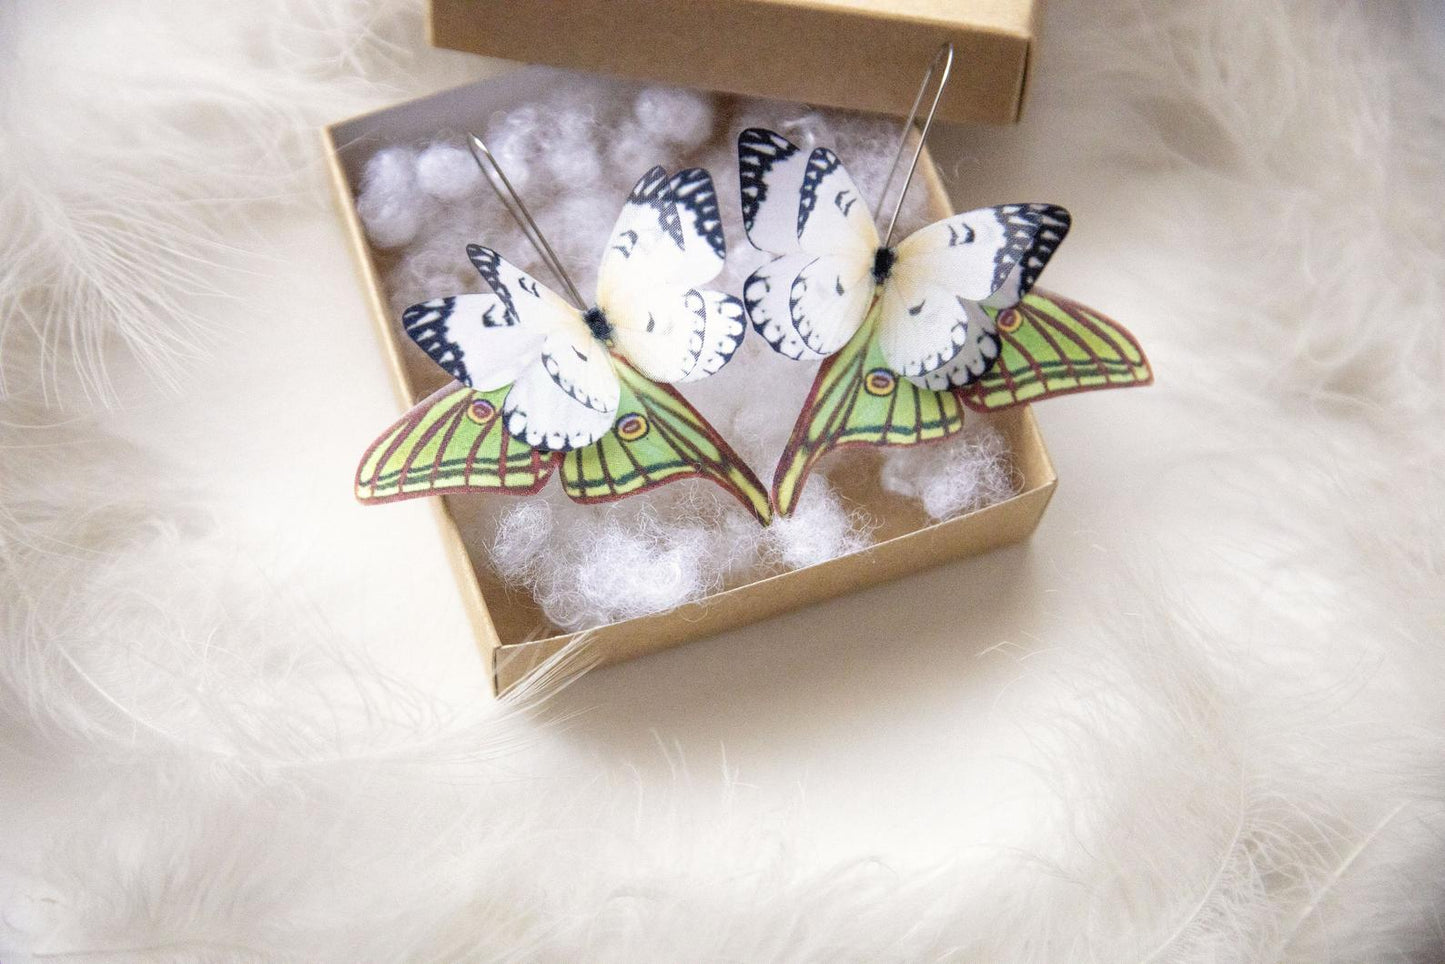 Lunar moth earrings with ivory butterfly wings